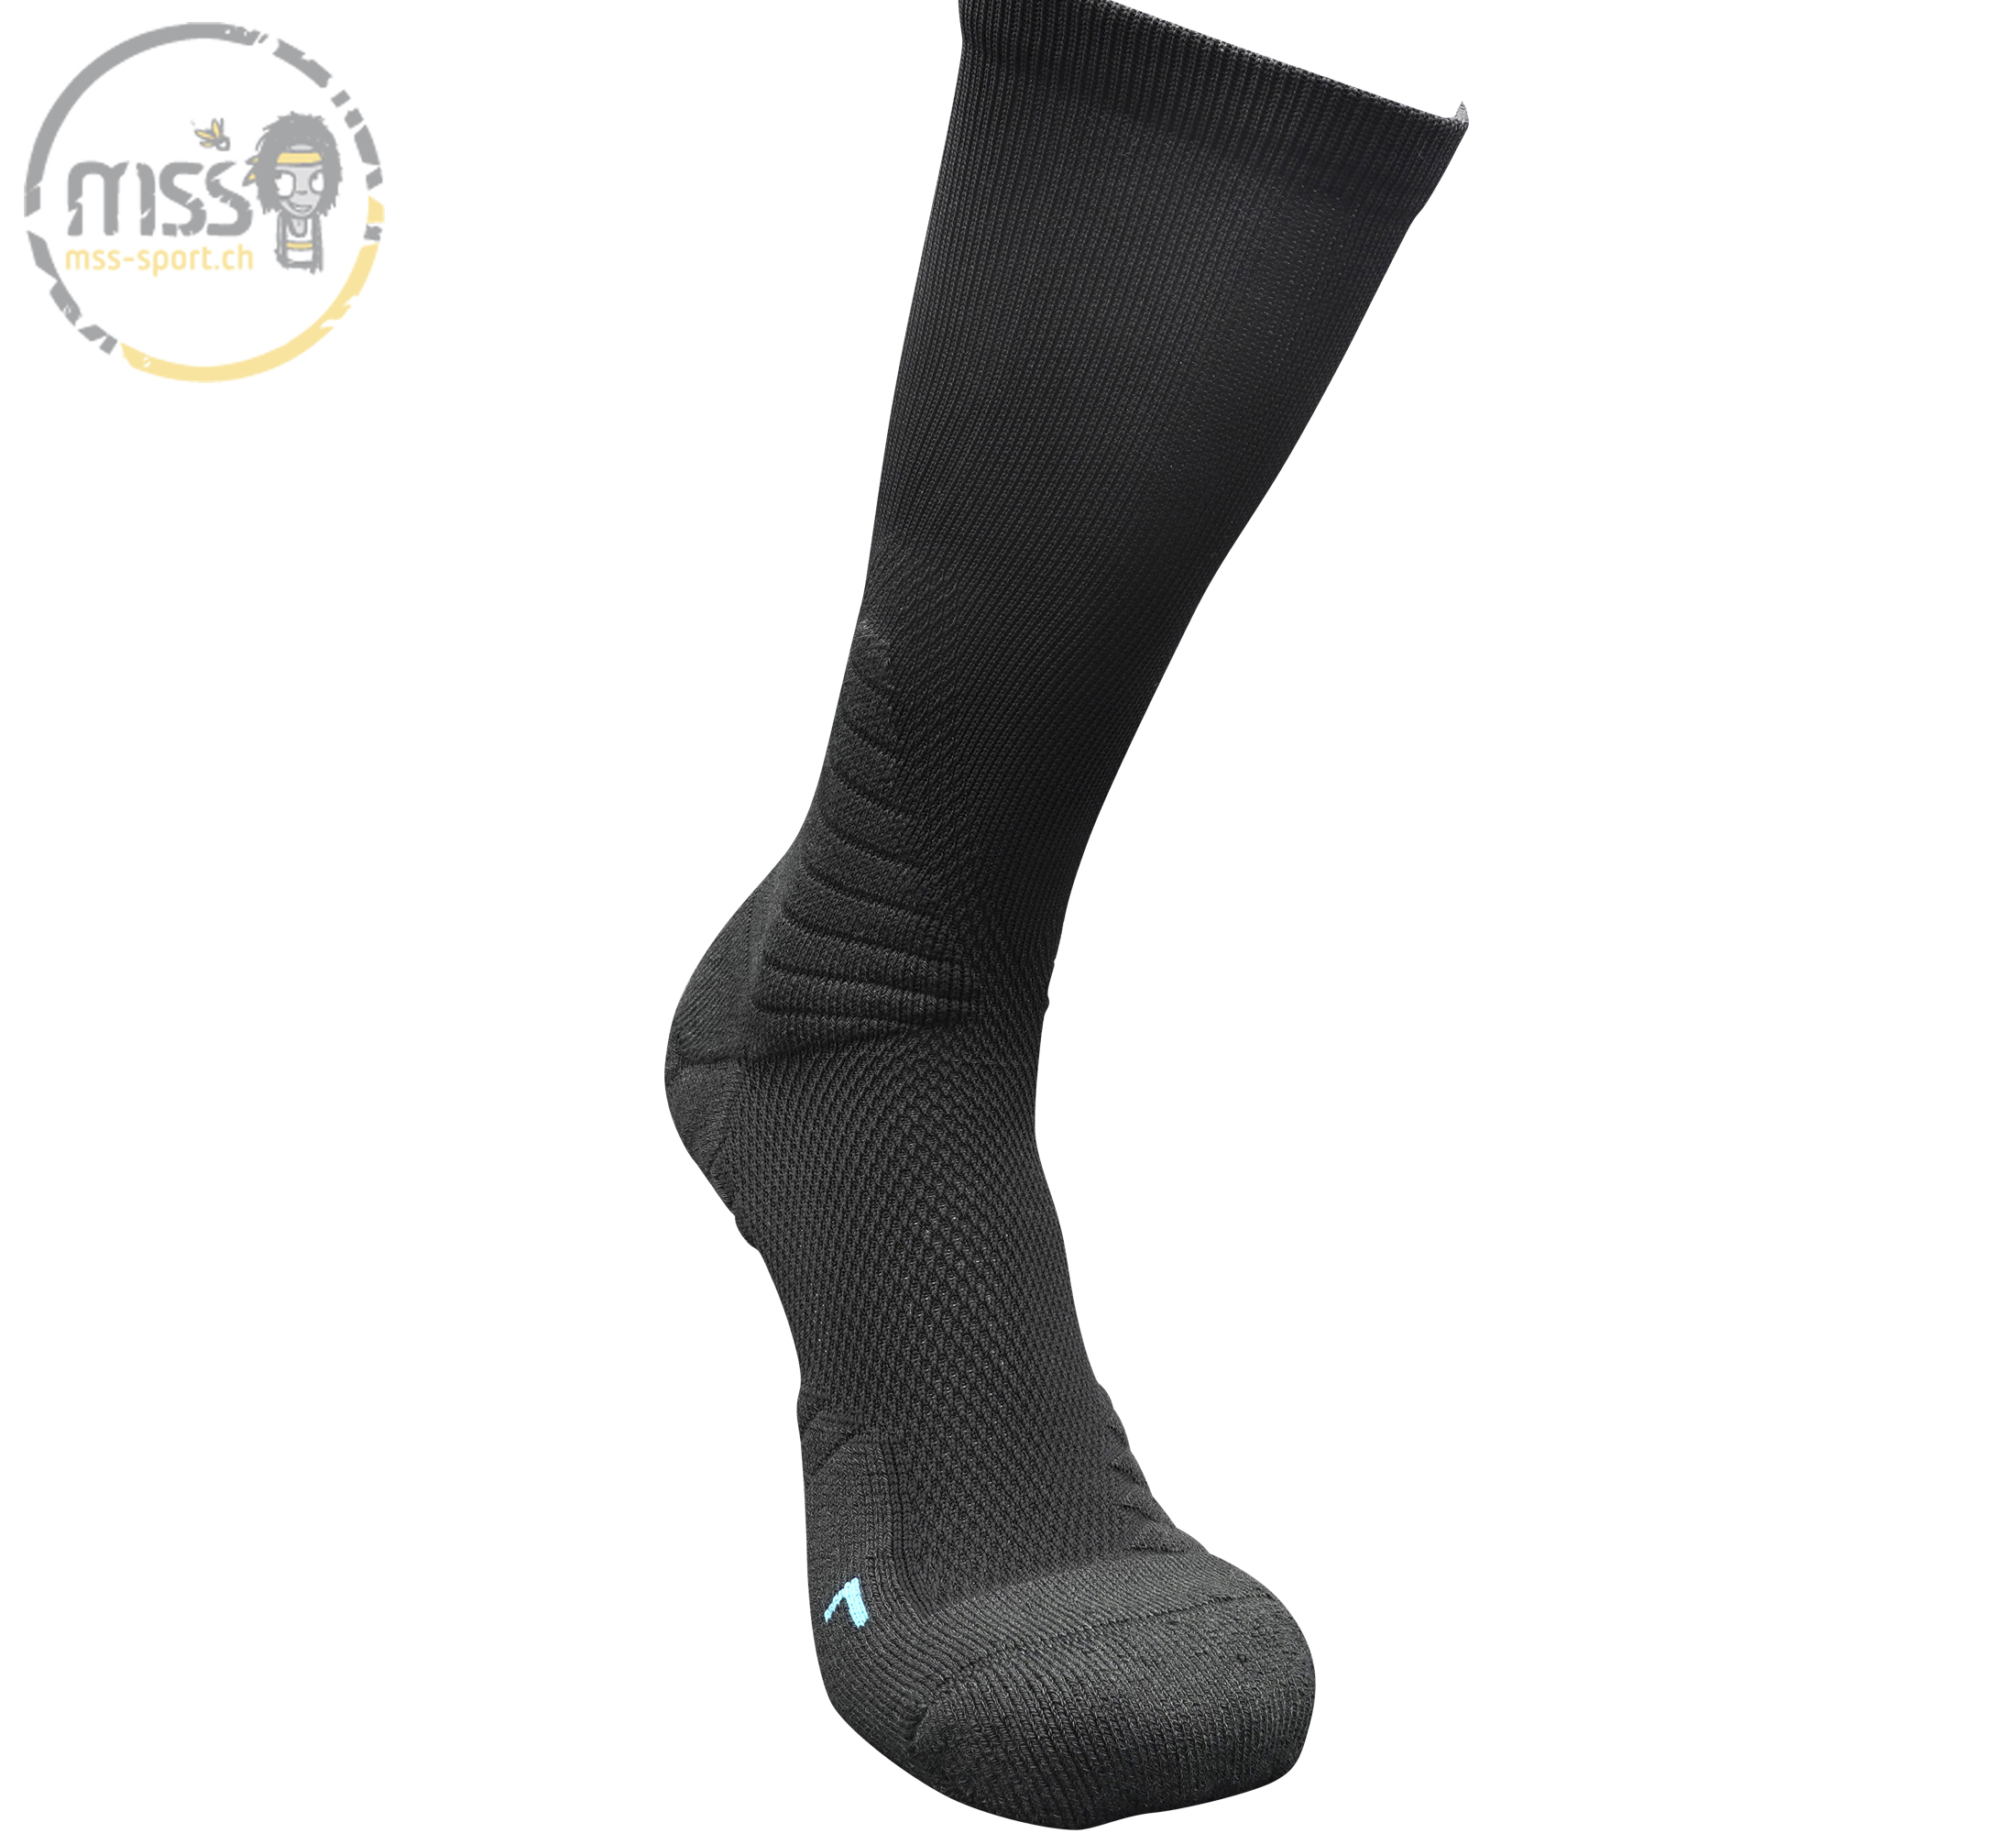 mss-socks Smash 5700 high black